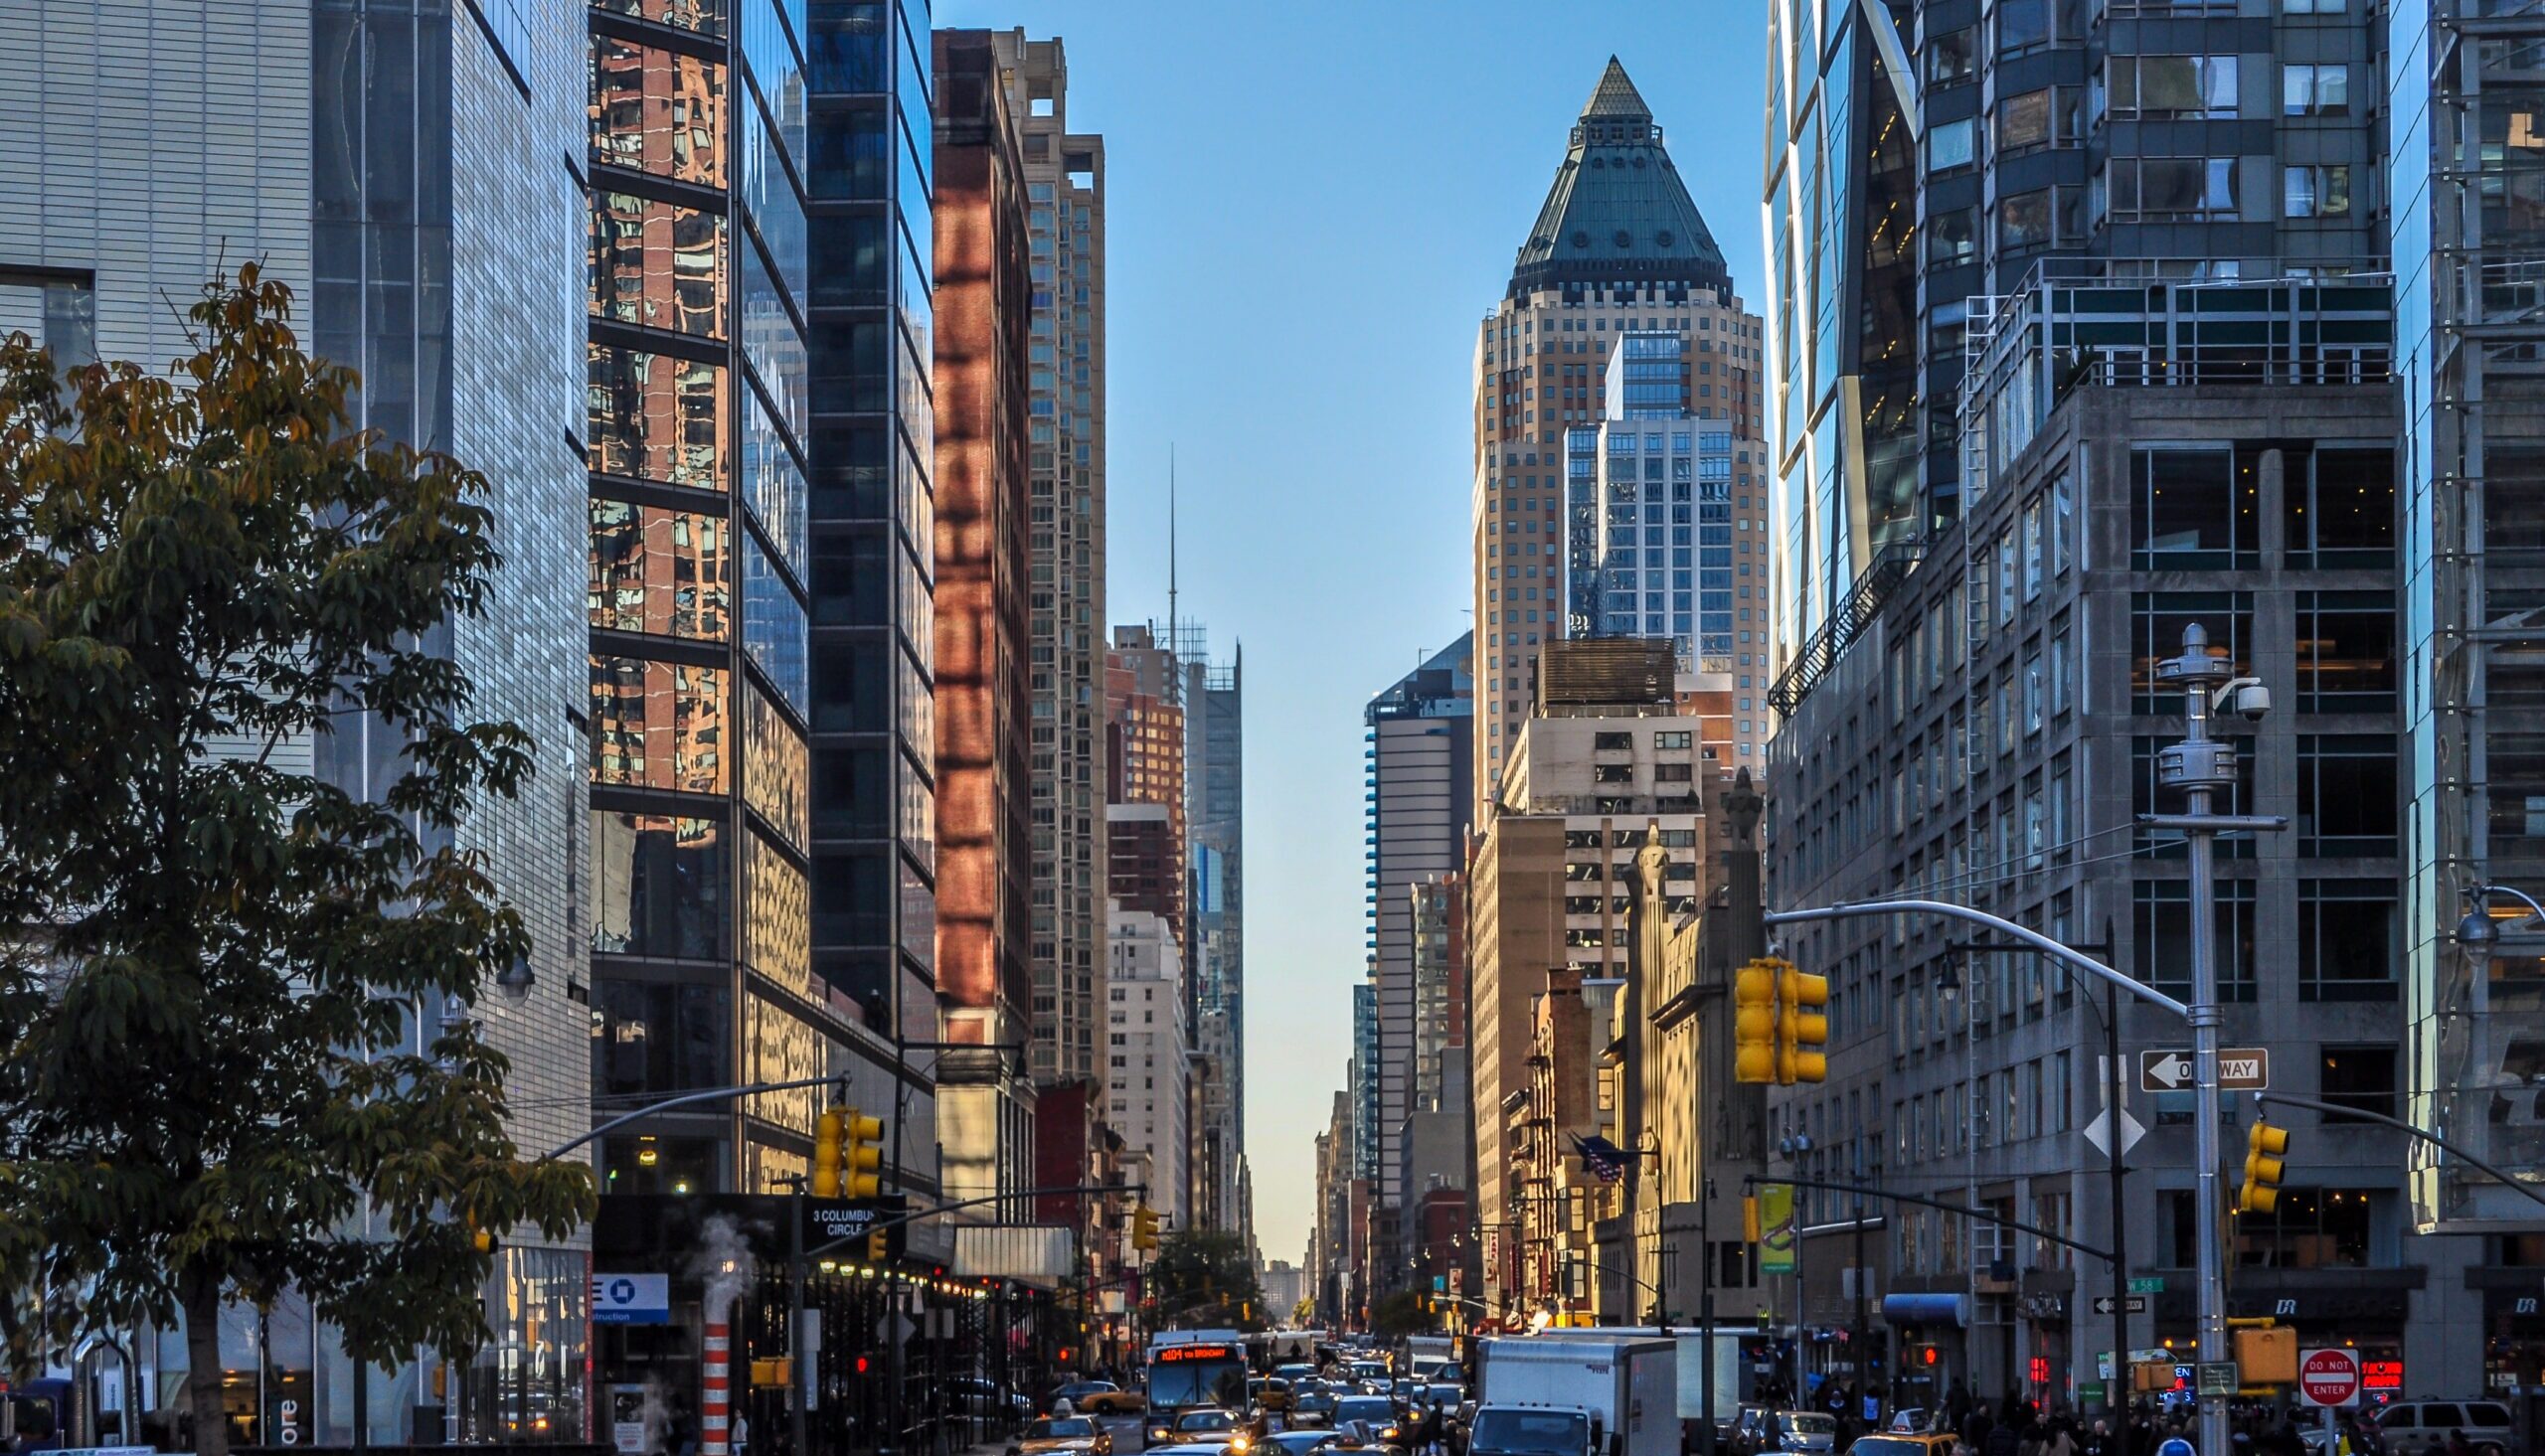 NYC street scene New York - decarbonising real estate